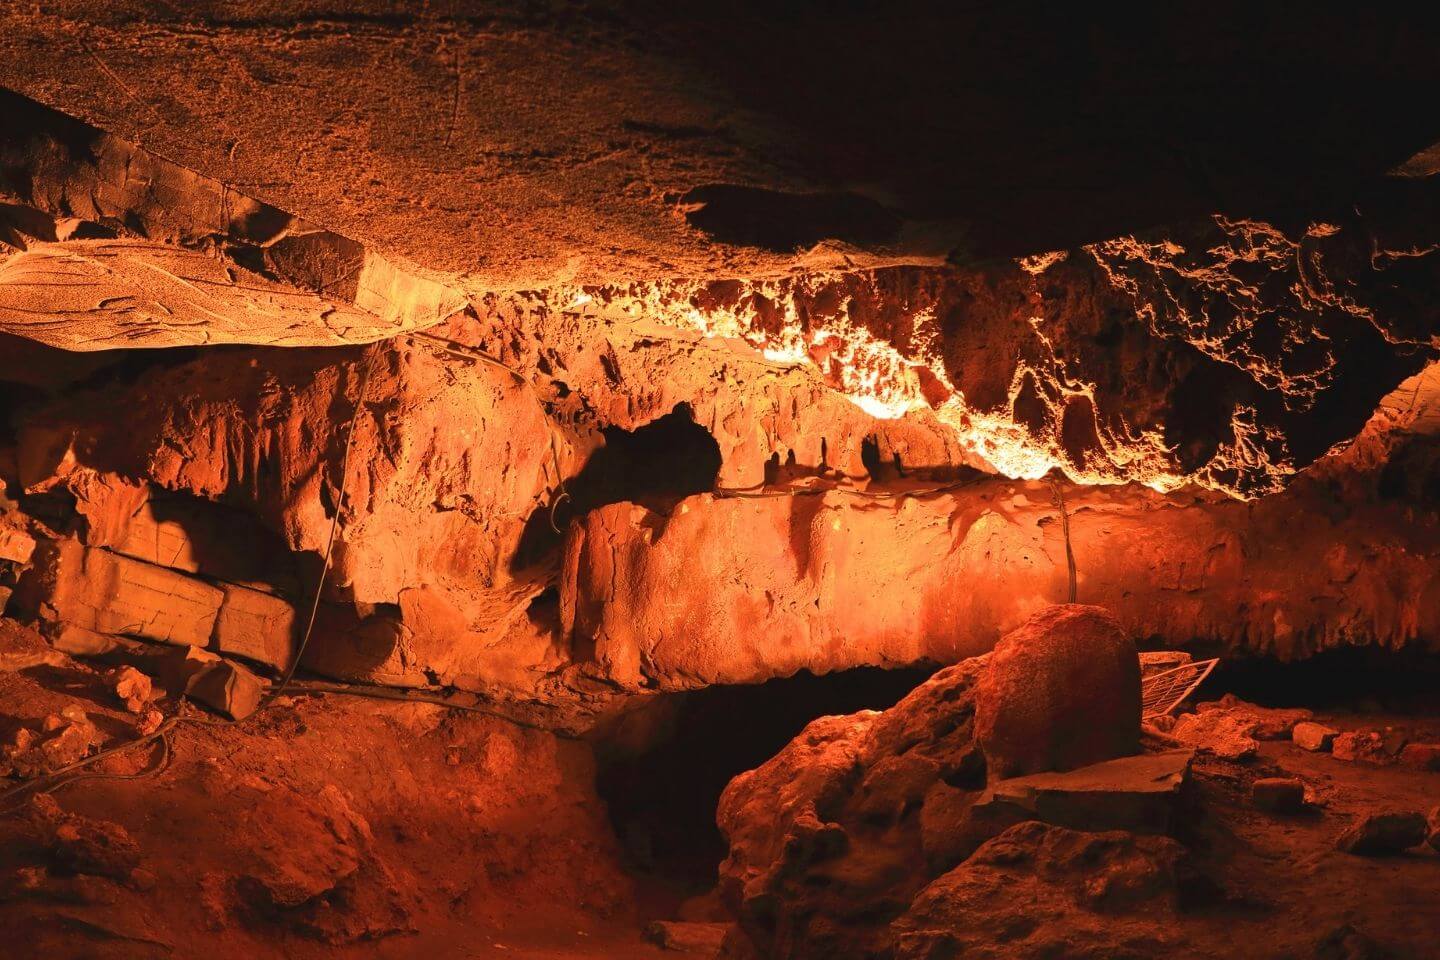 Belum Caves Kurnool Most preferred Tourist Spots near Hyderabad within 400 km